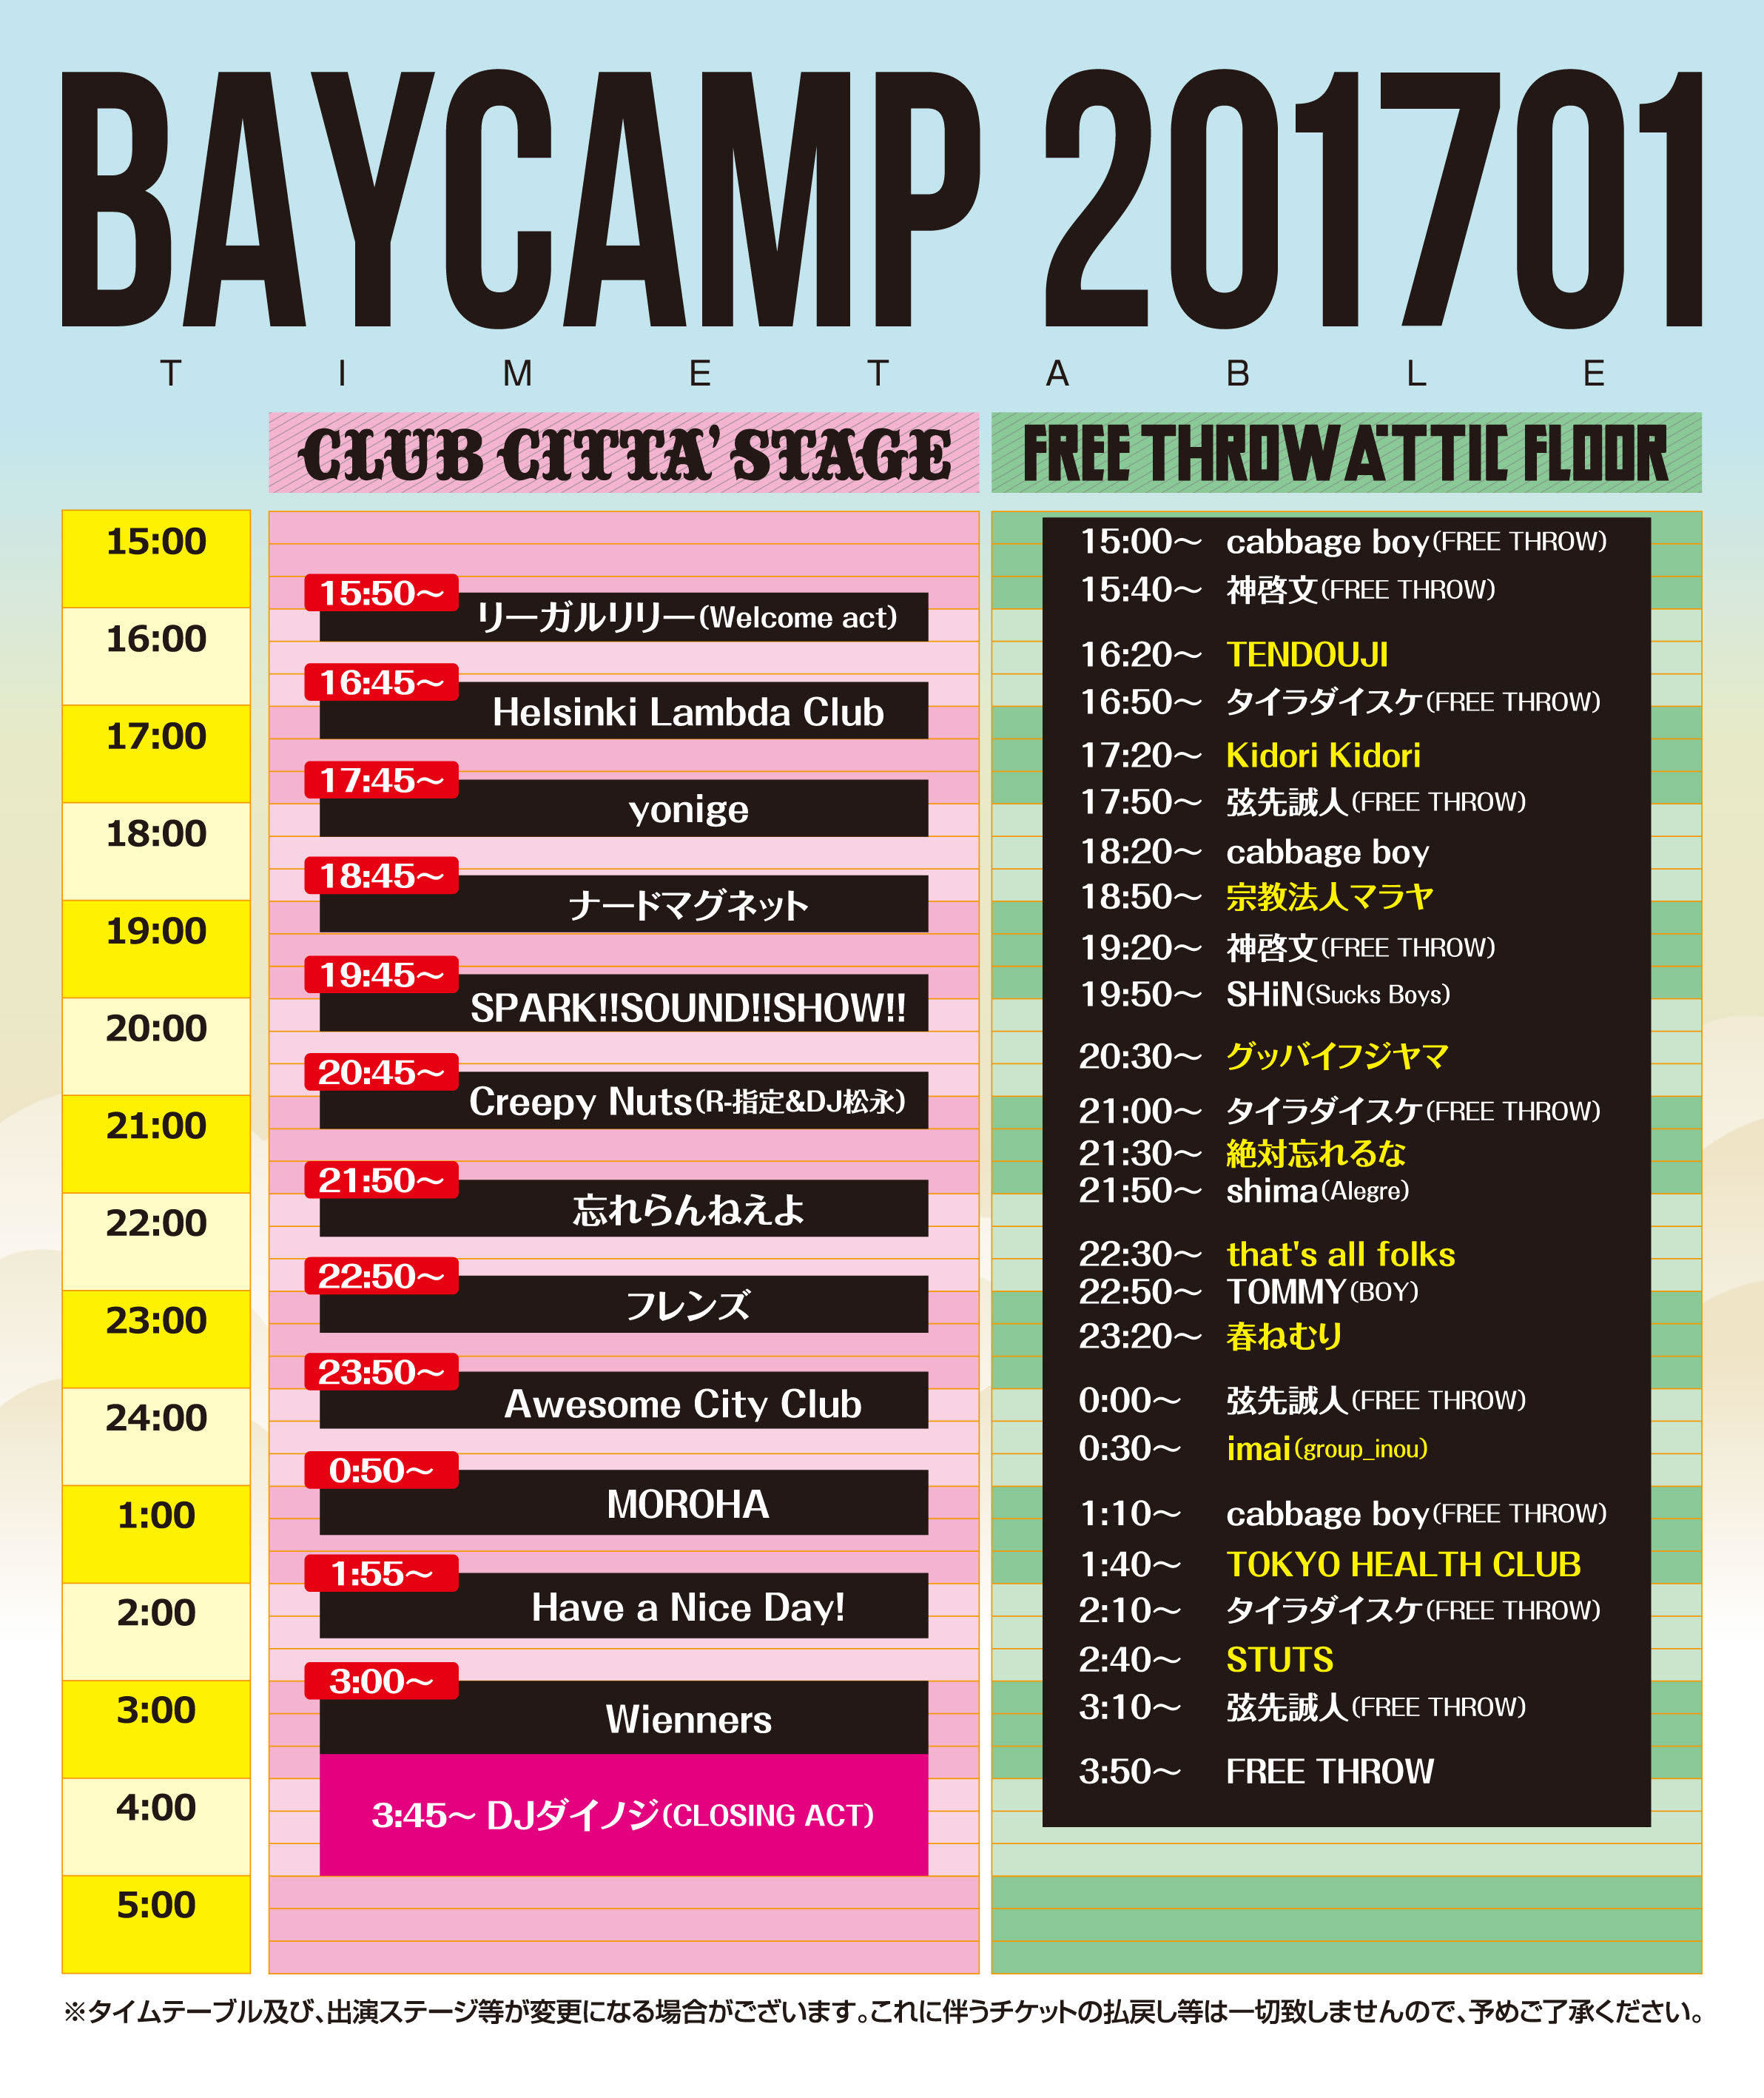 BAYCAMP 201701　タイムテーブル